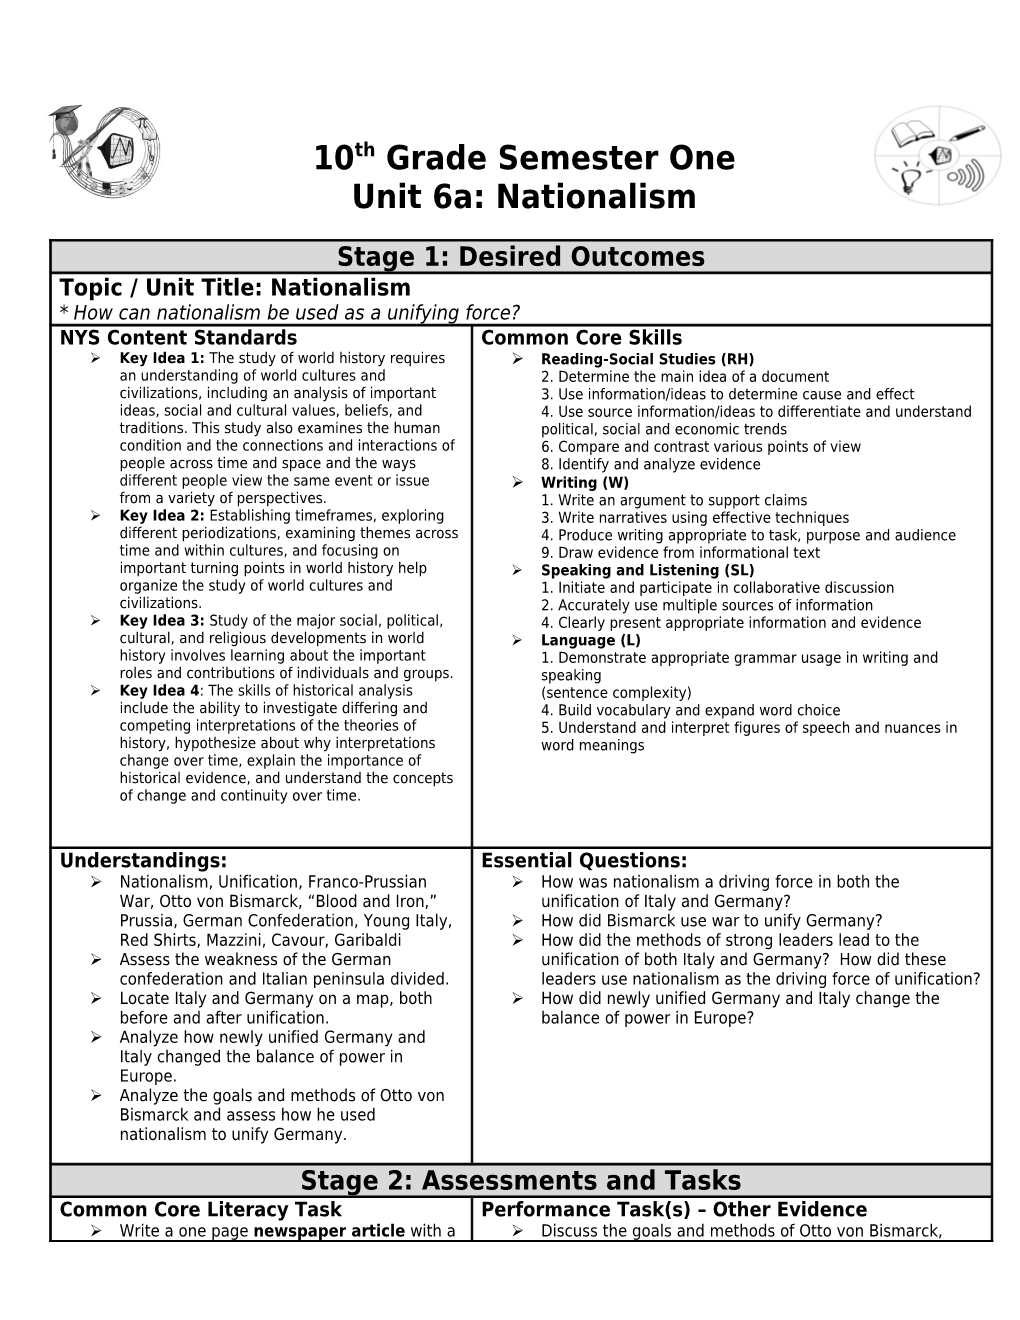 Unit 6A: Nationalism